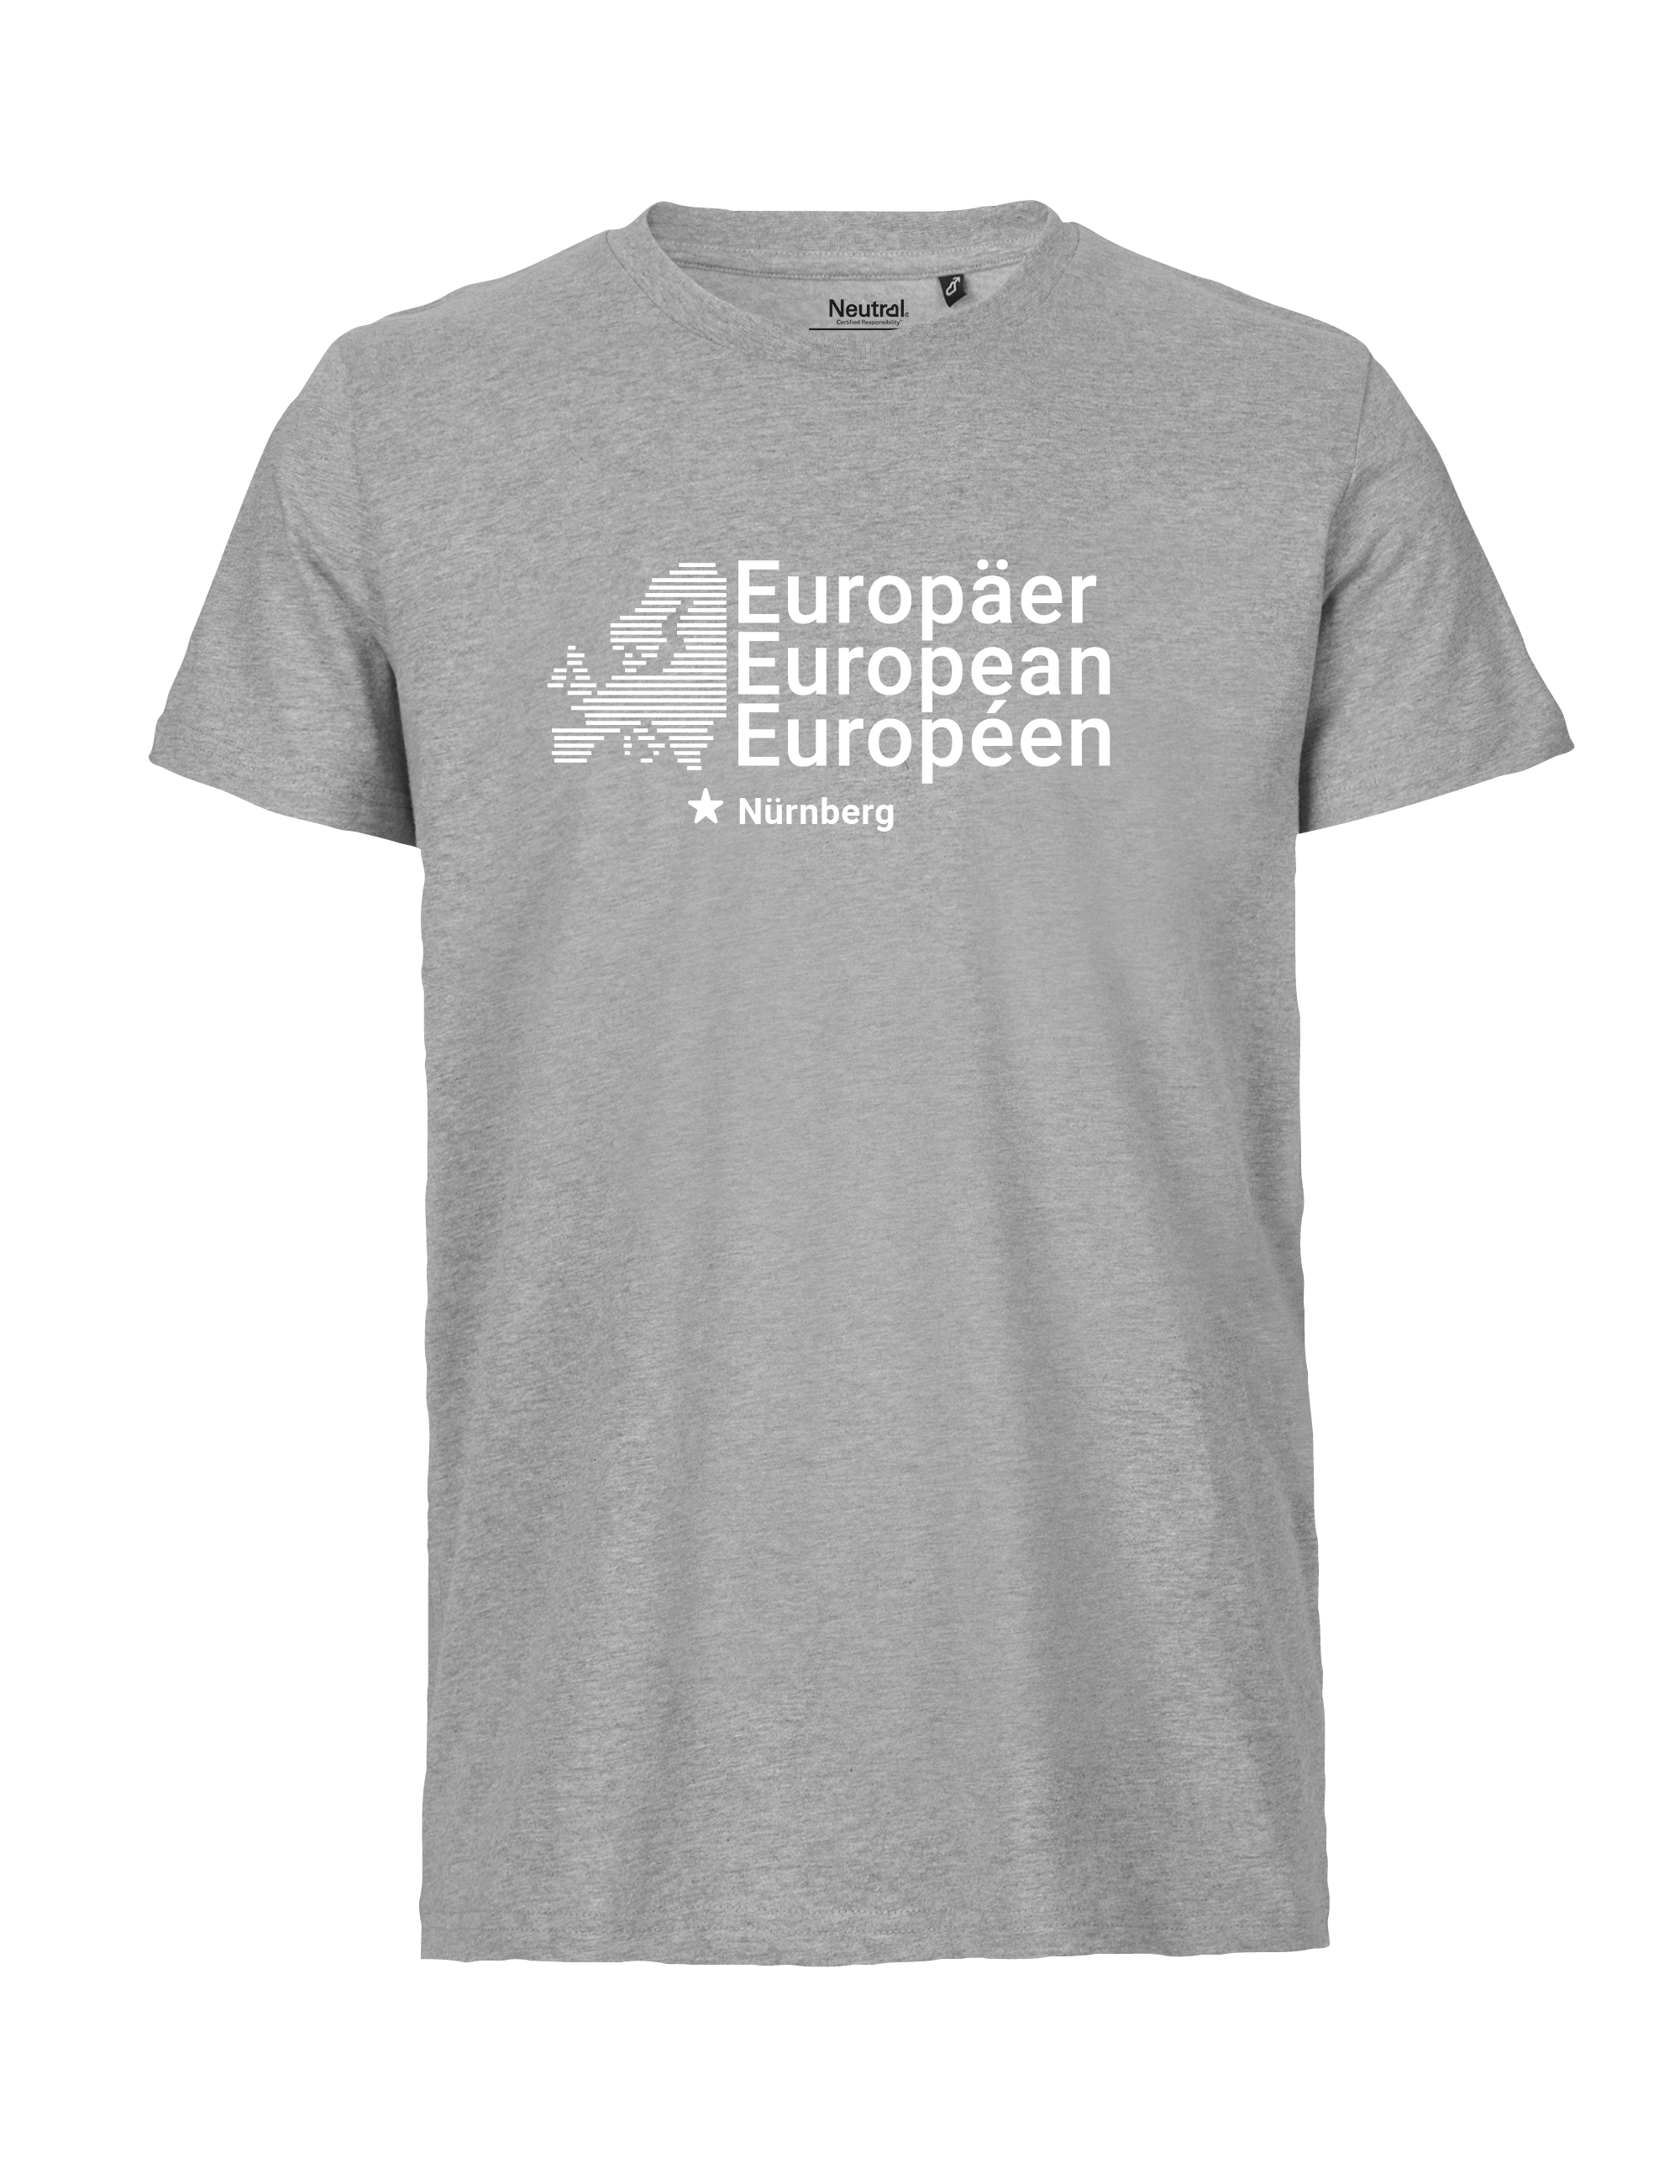 Europe-Emotions_Ansicht_Shirt_Nuernberg